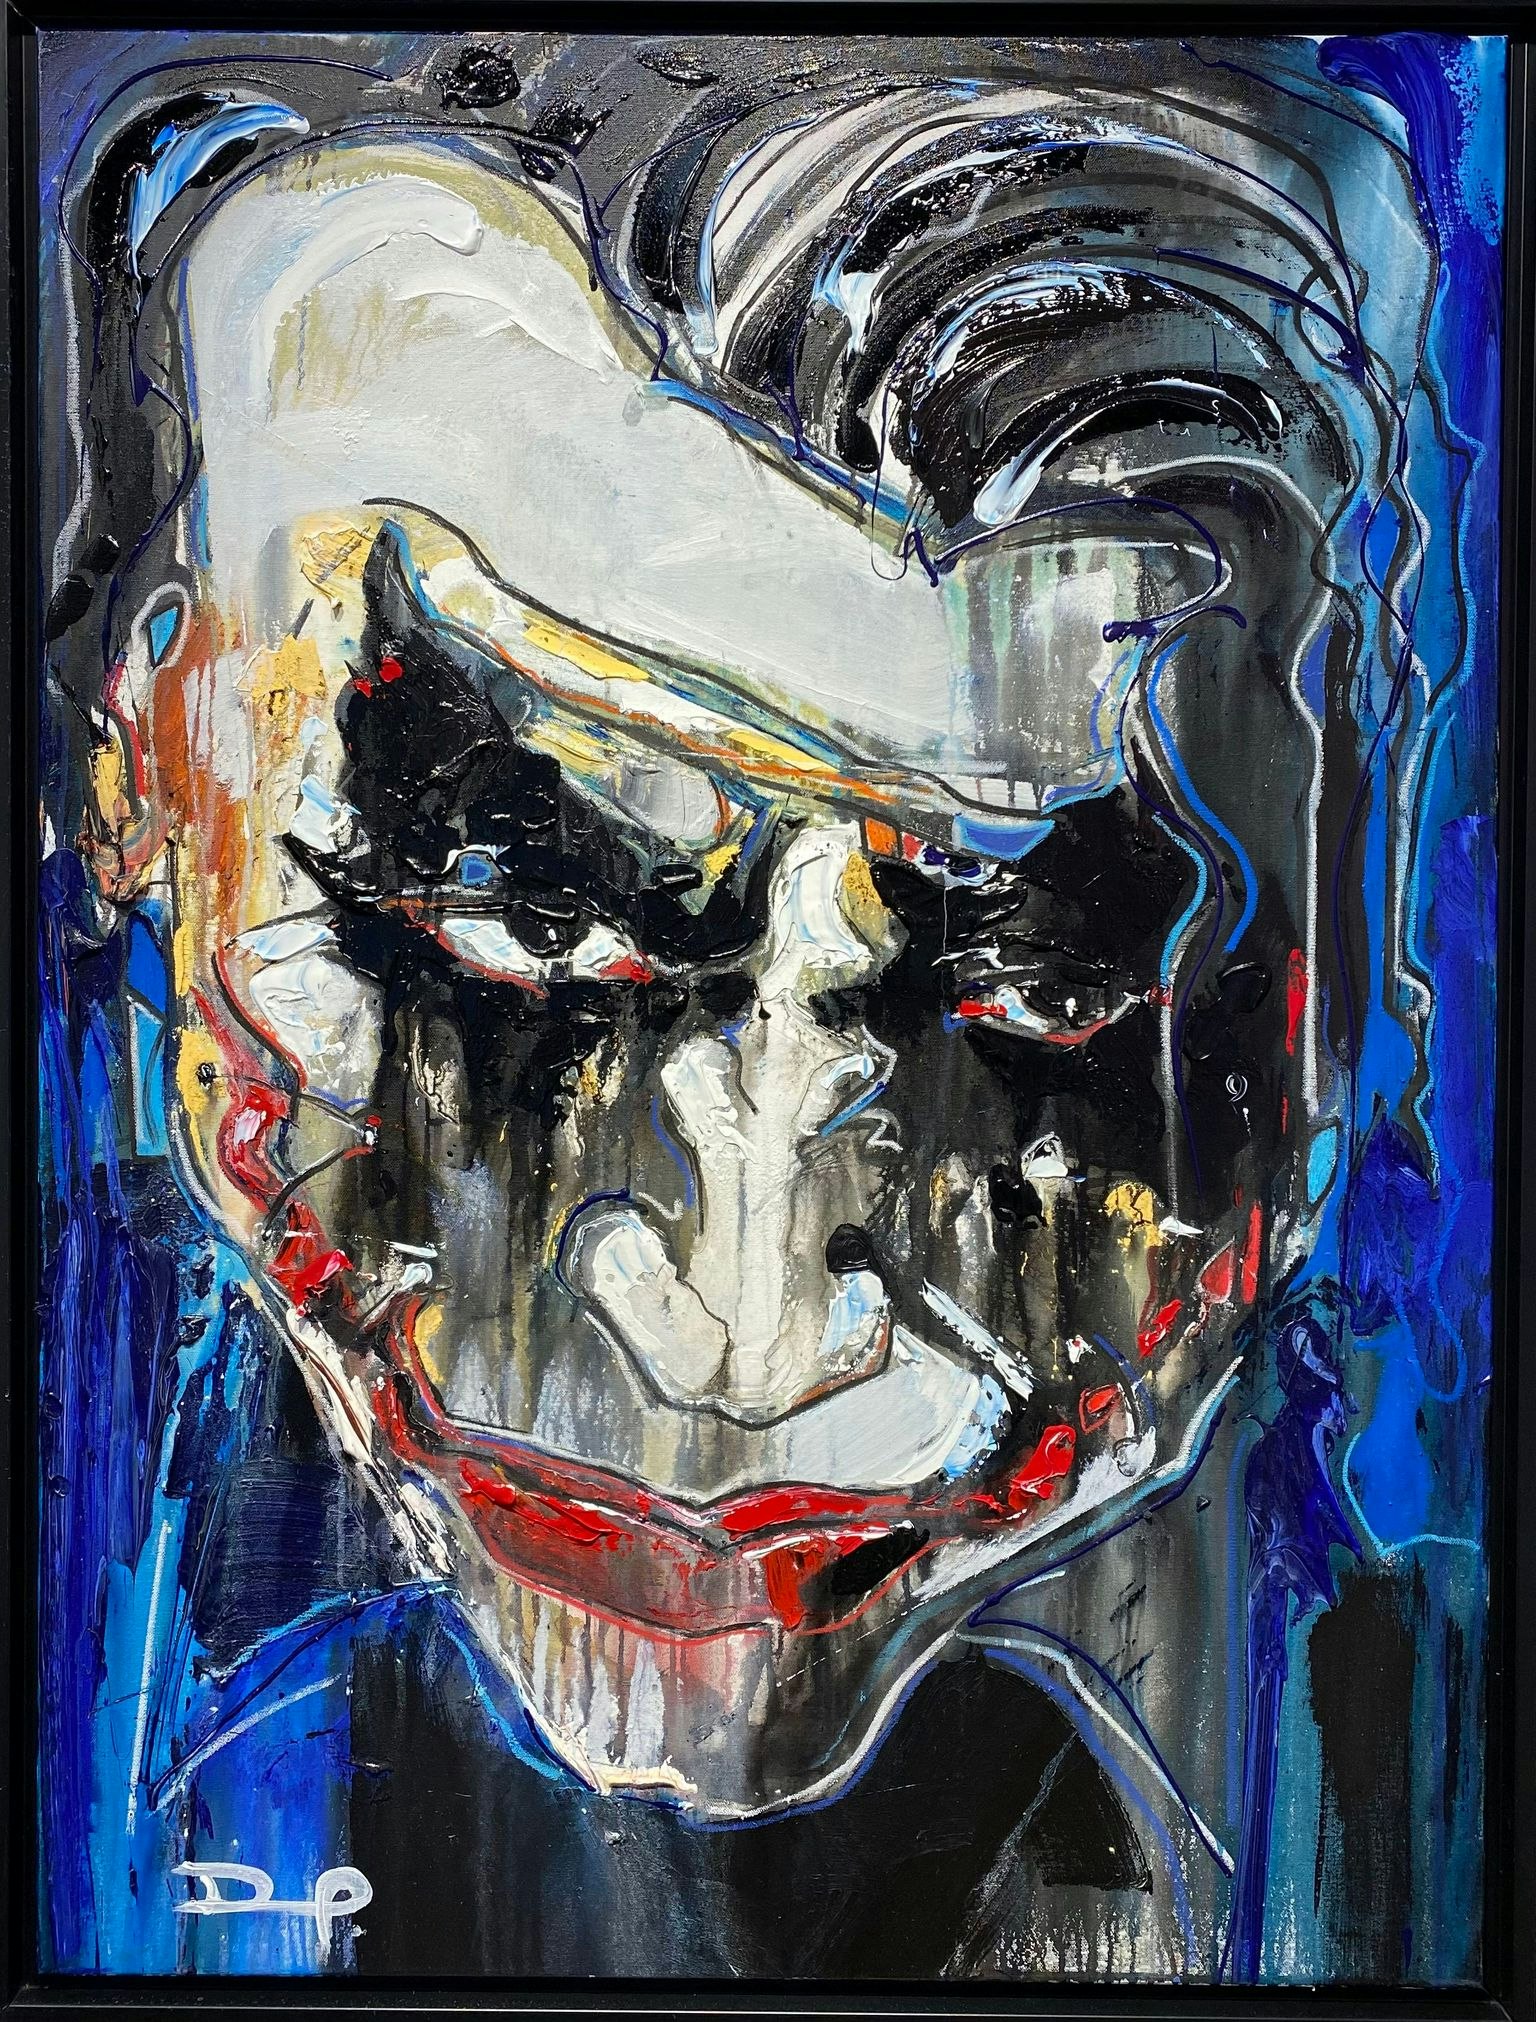 Joker from Batman with blue background